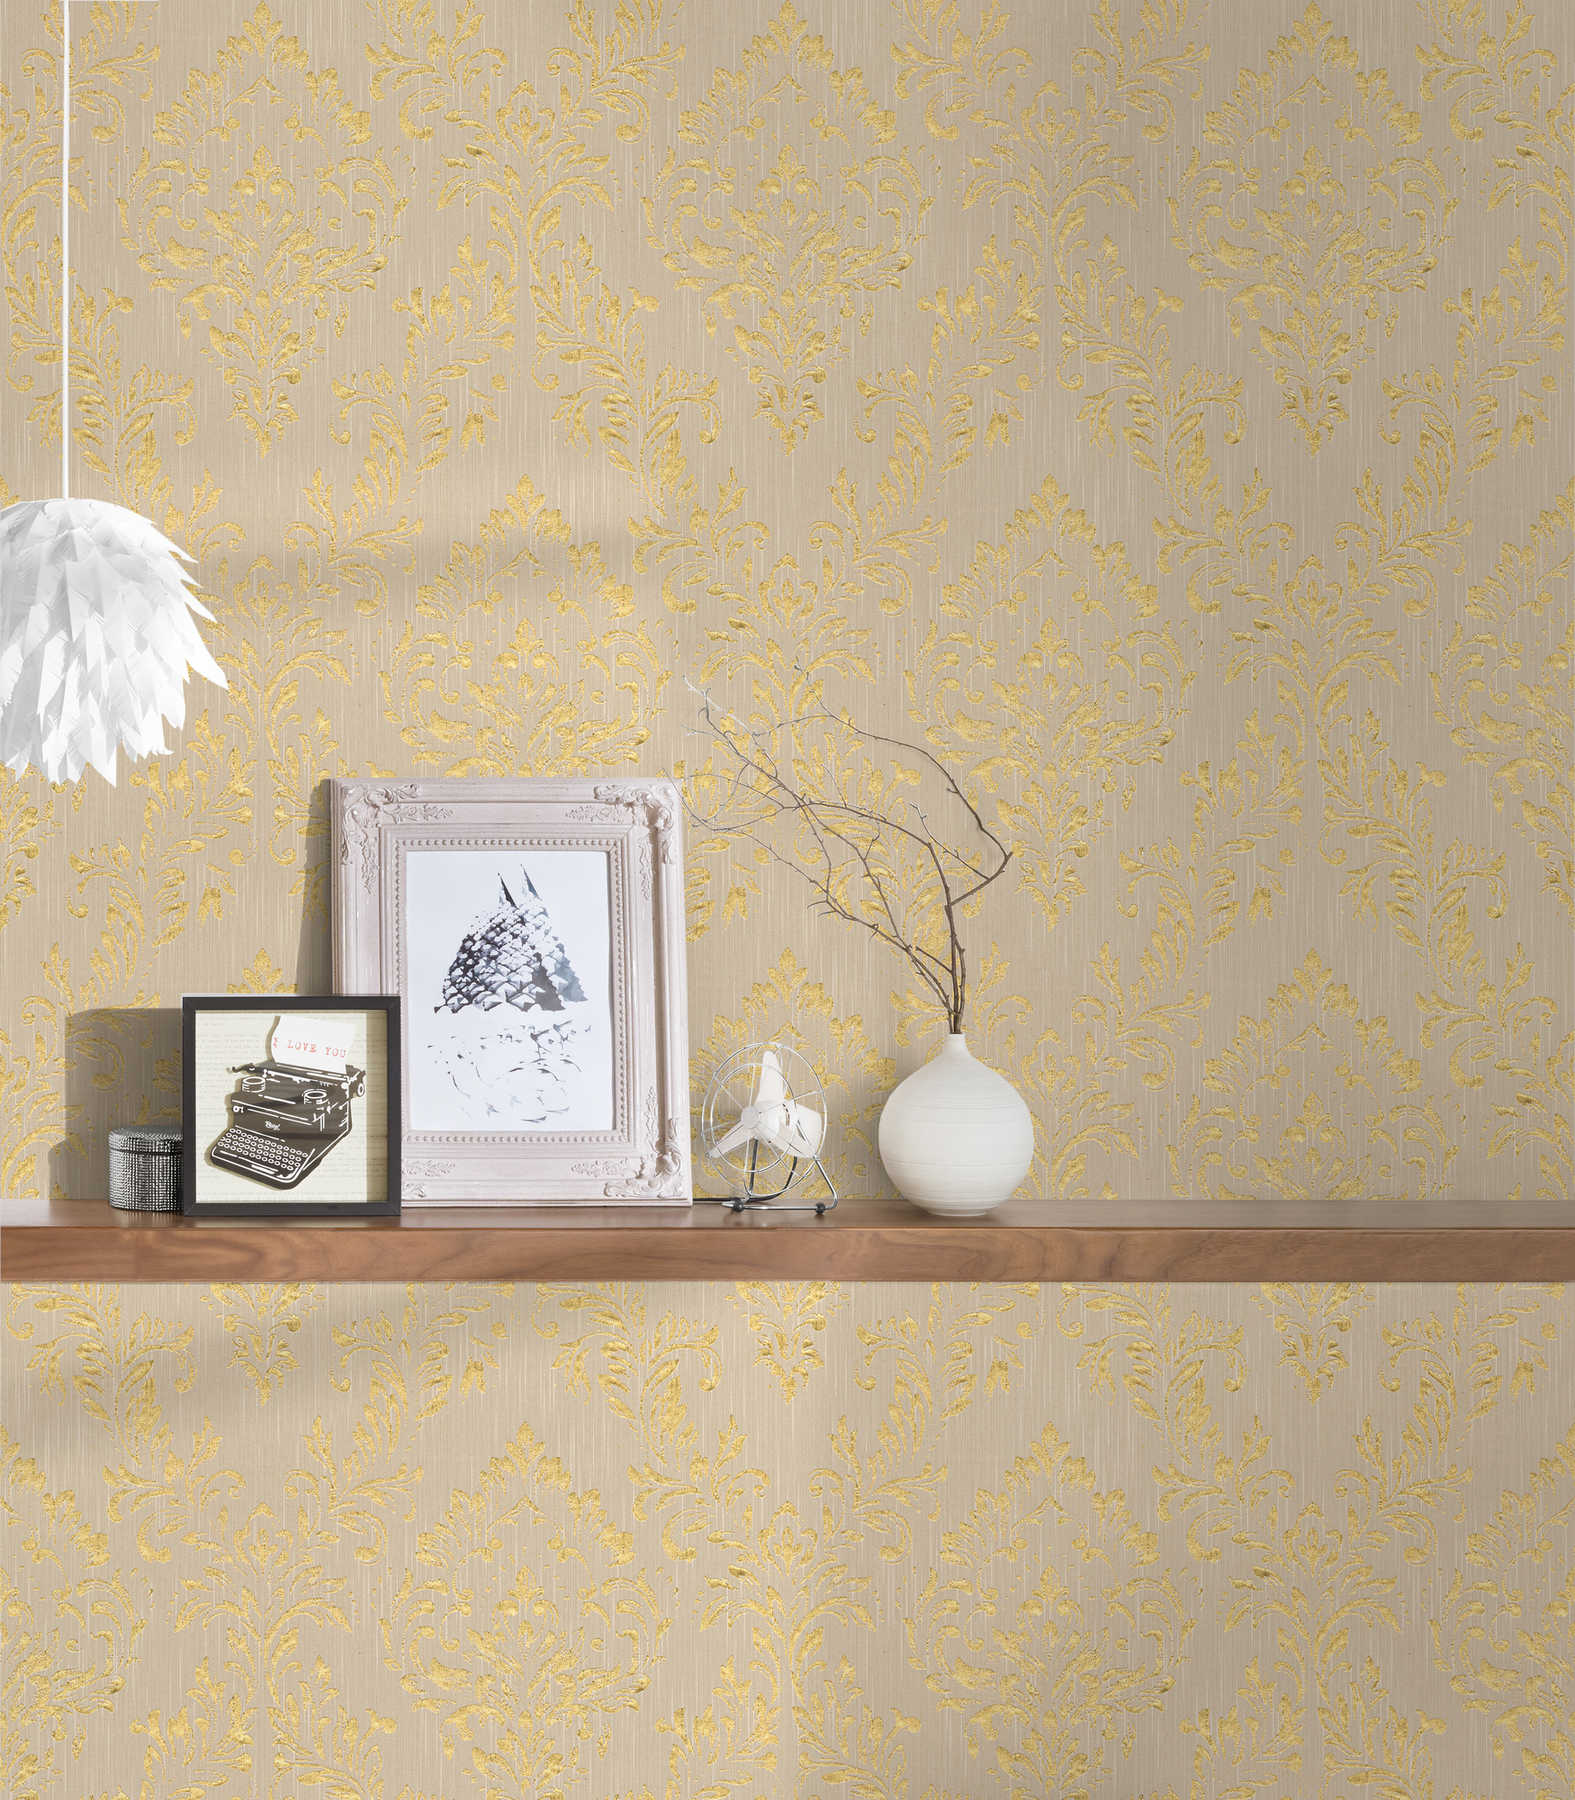             Ornament-Tapete floral mit goldenem Glitzer-Effekt – Gold, Beige
        